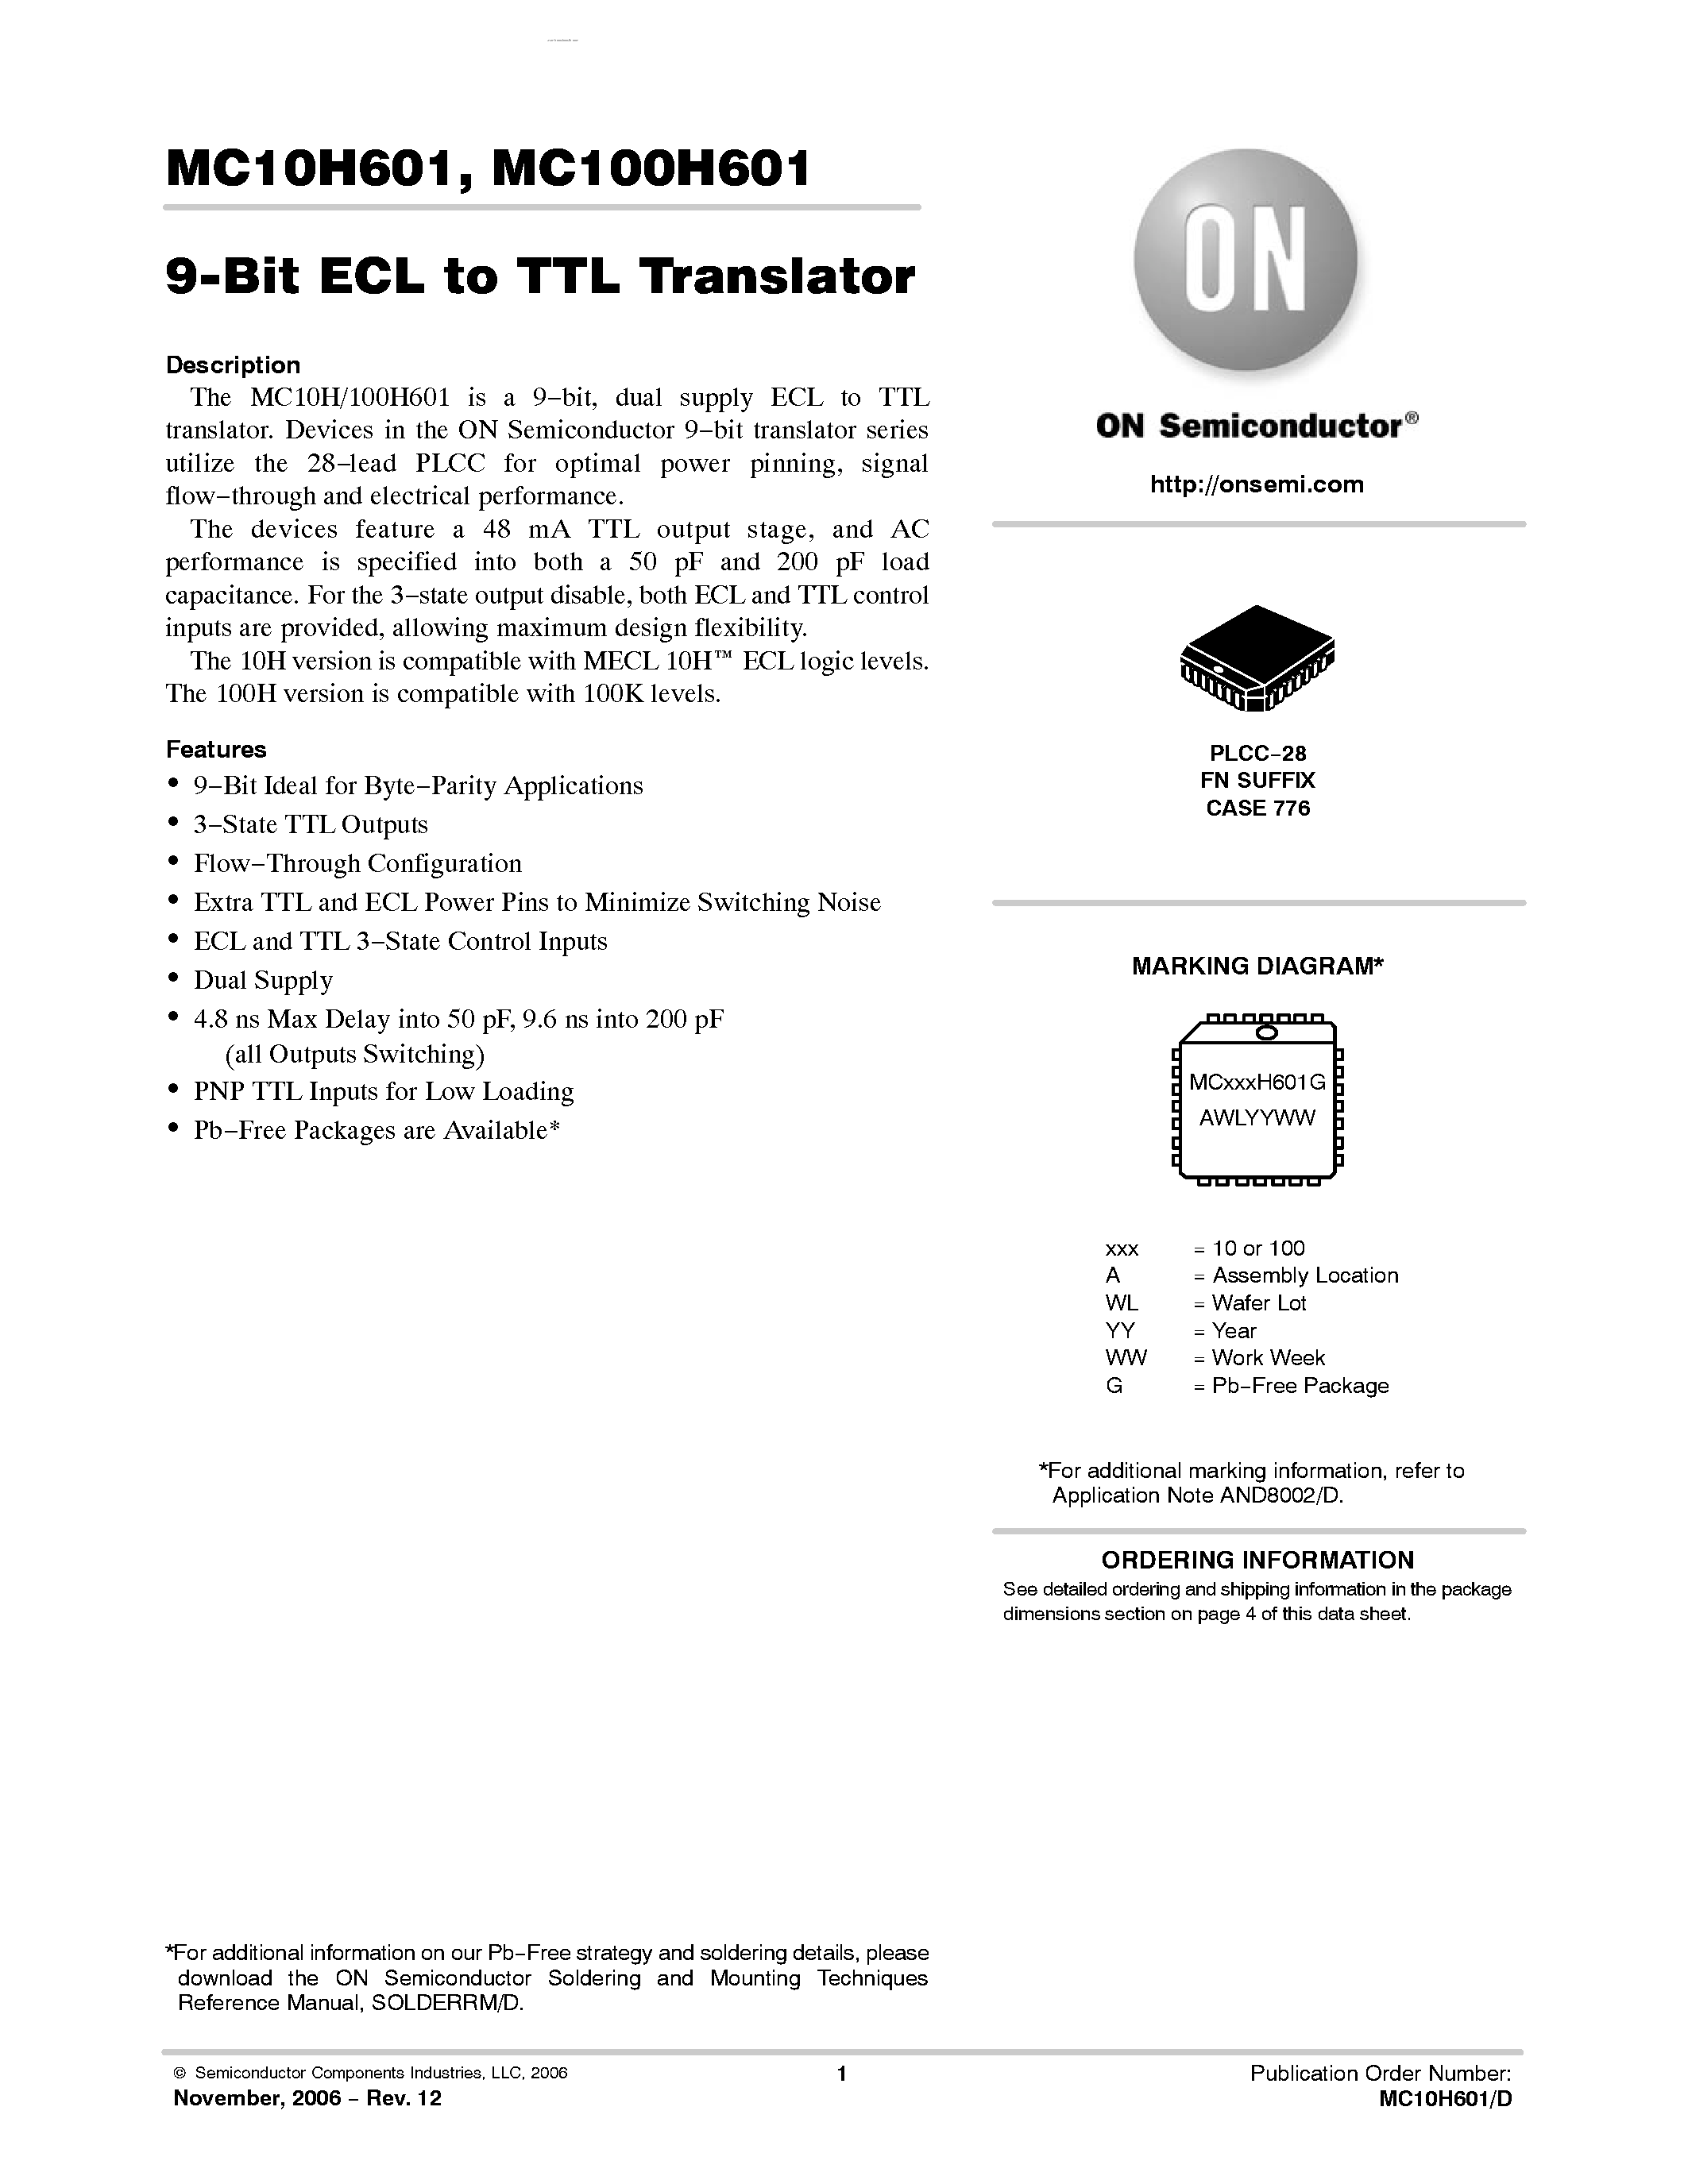 Datasheet MC10H601 - 9-Bit ECL/TTL Translator page 1